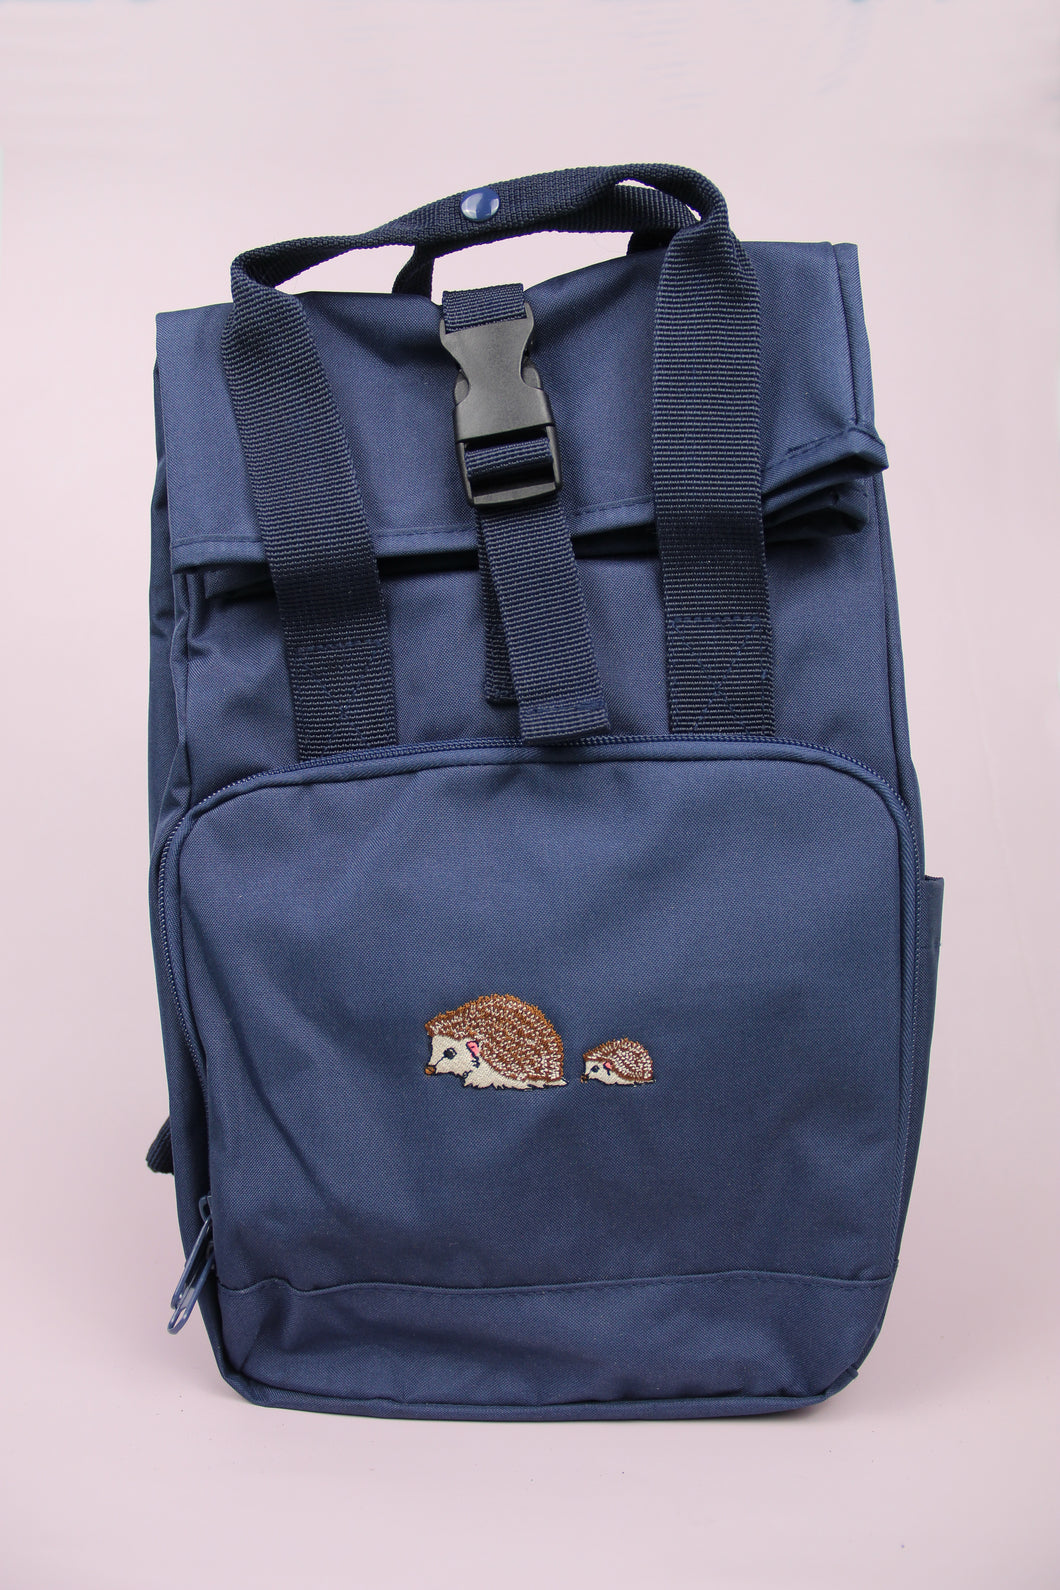 Hedgehog Recycled Backpack - Navy